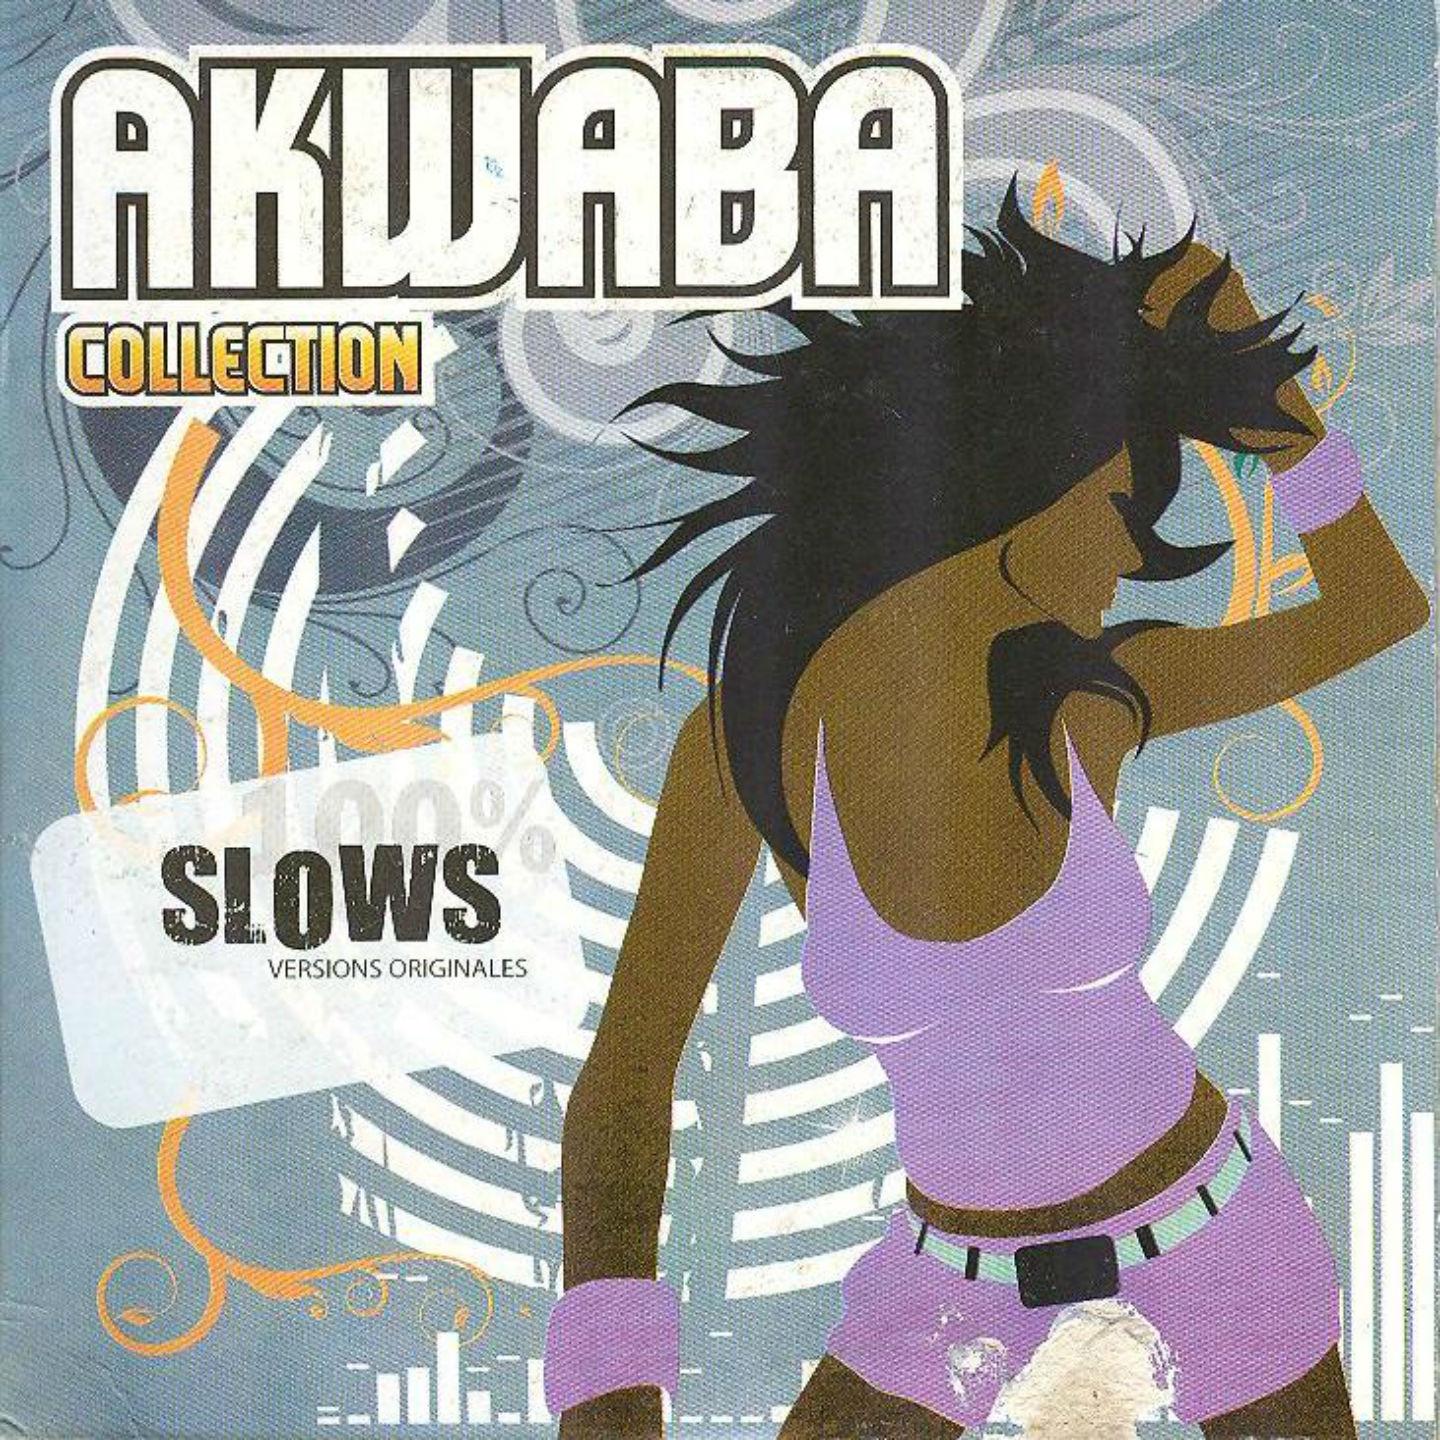 Akwaba Collection 100% Slows